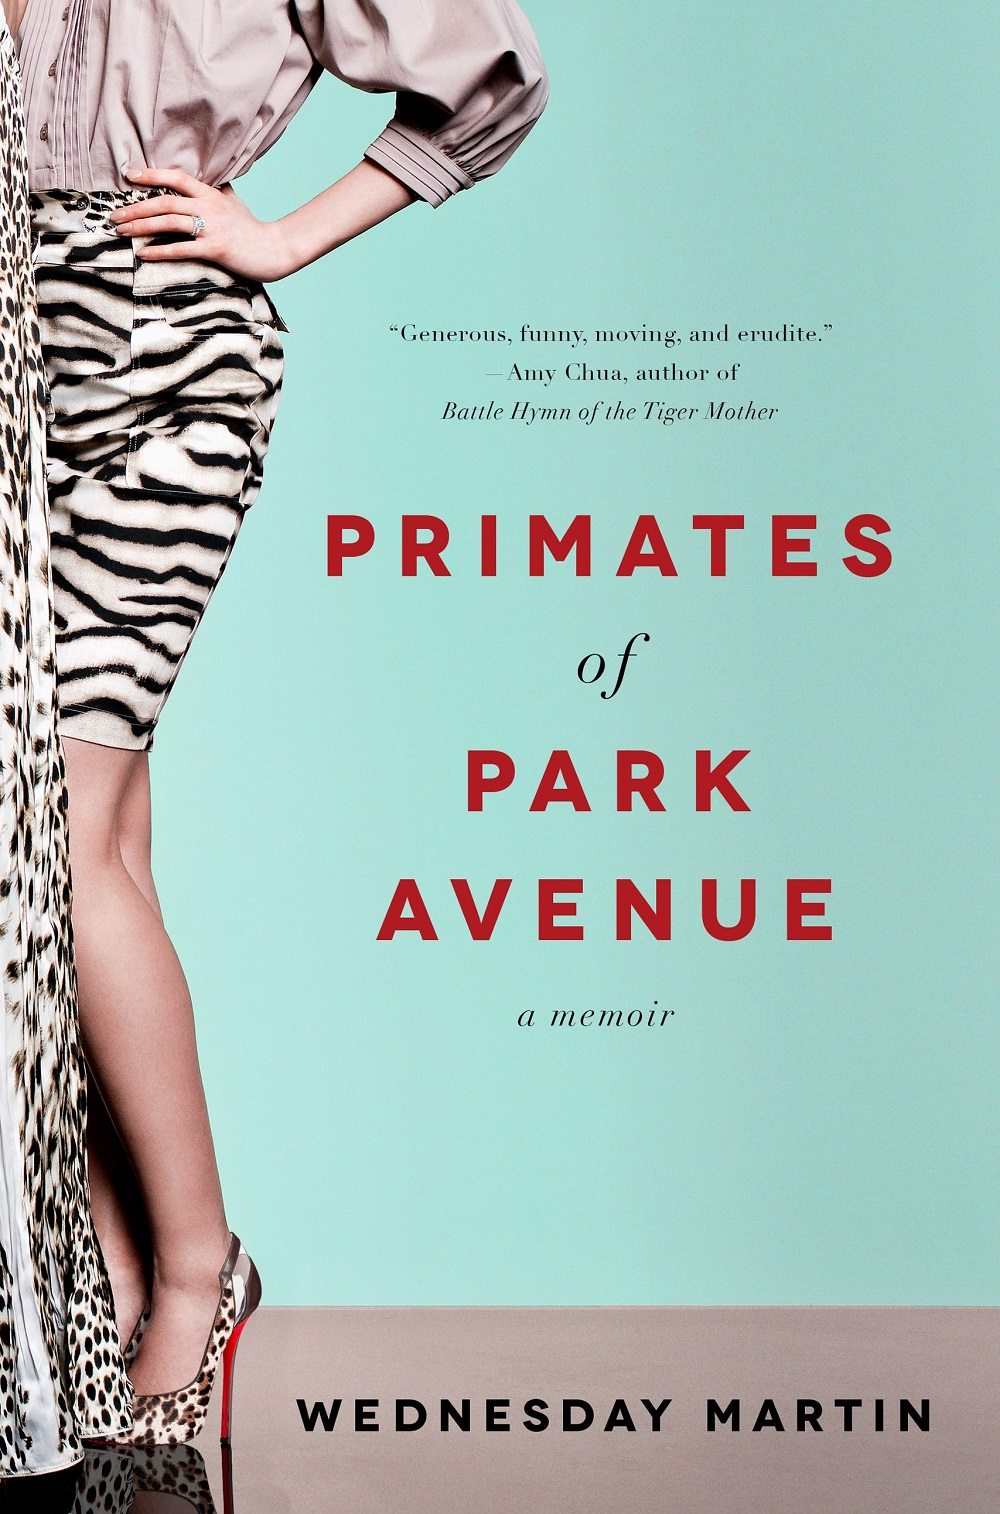 Primates of Park Avenue: A Memoir by Wednesday Martin 